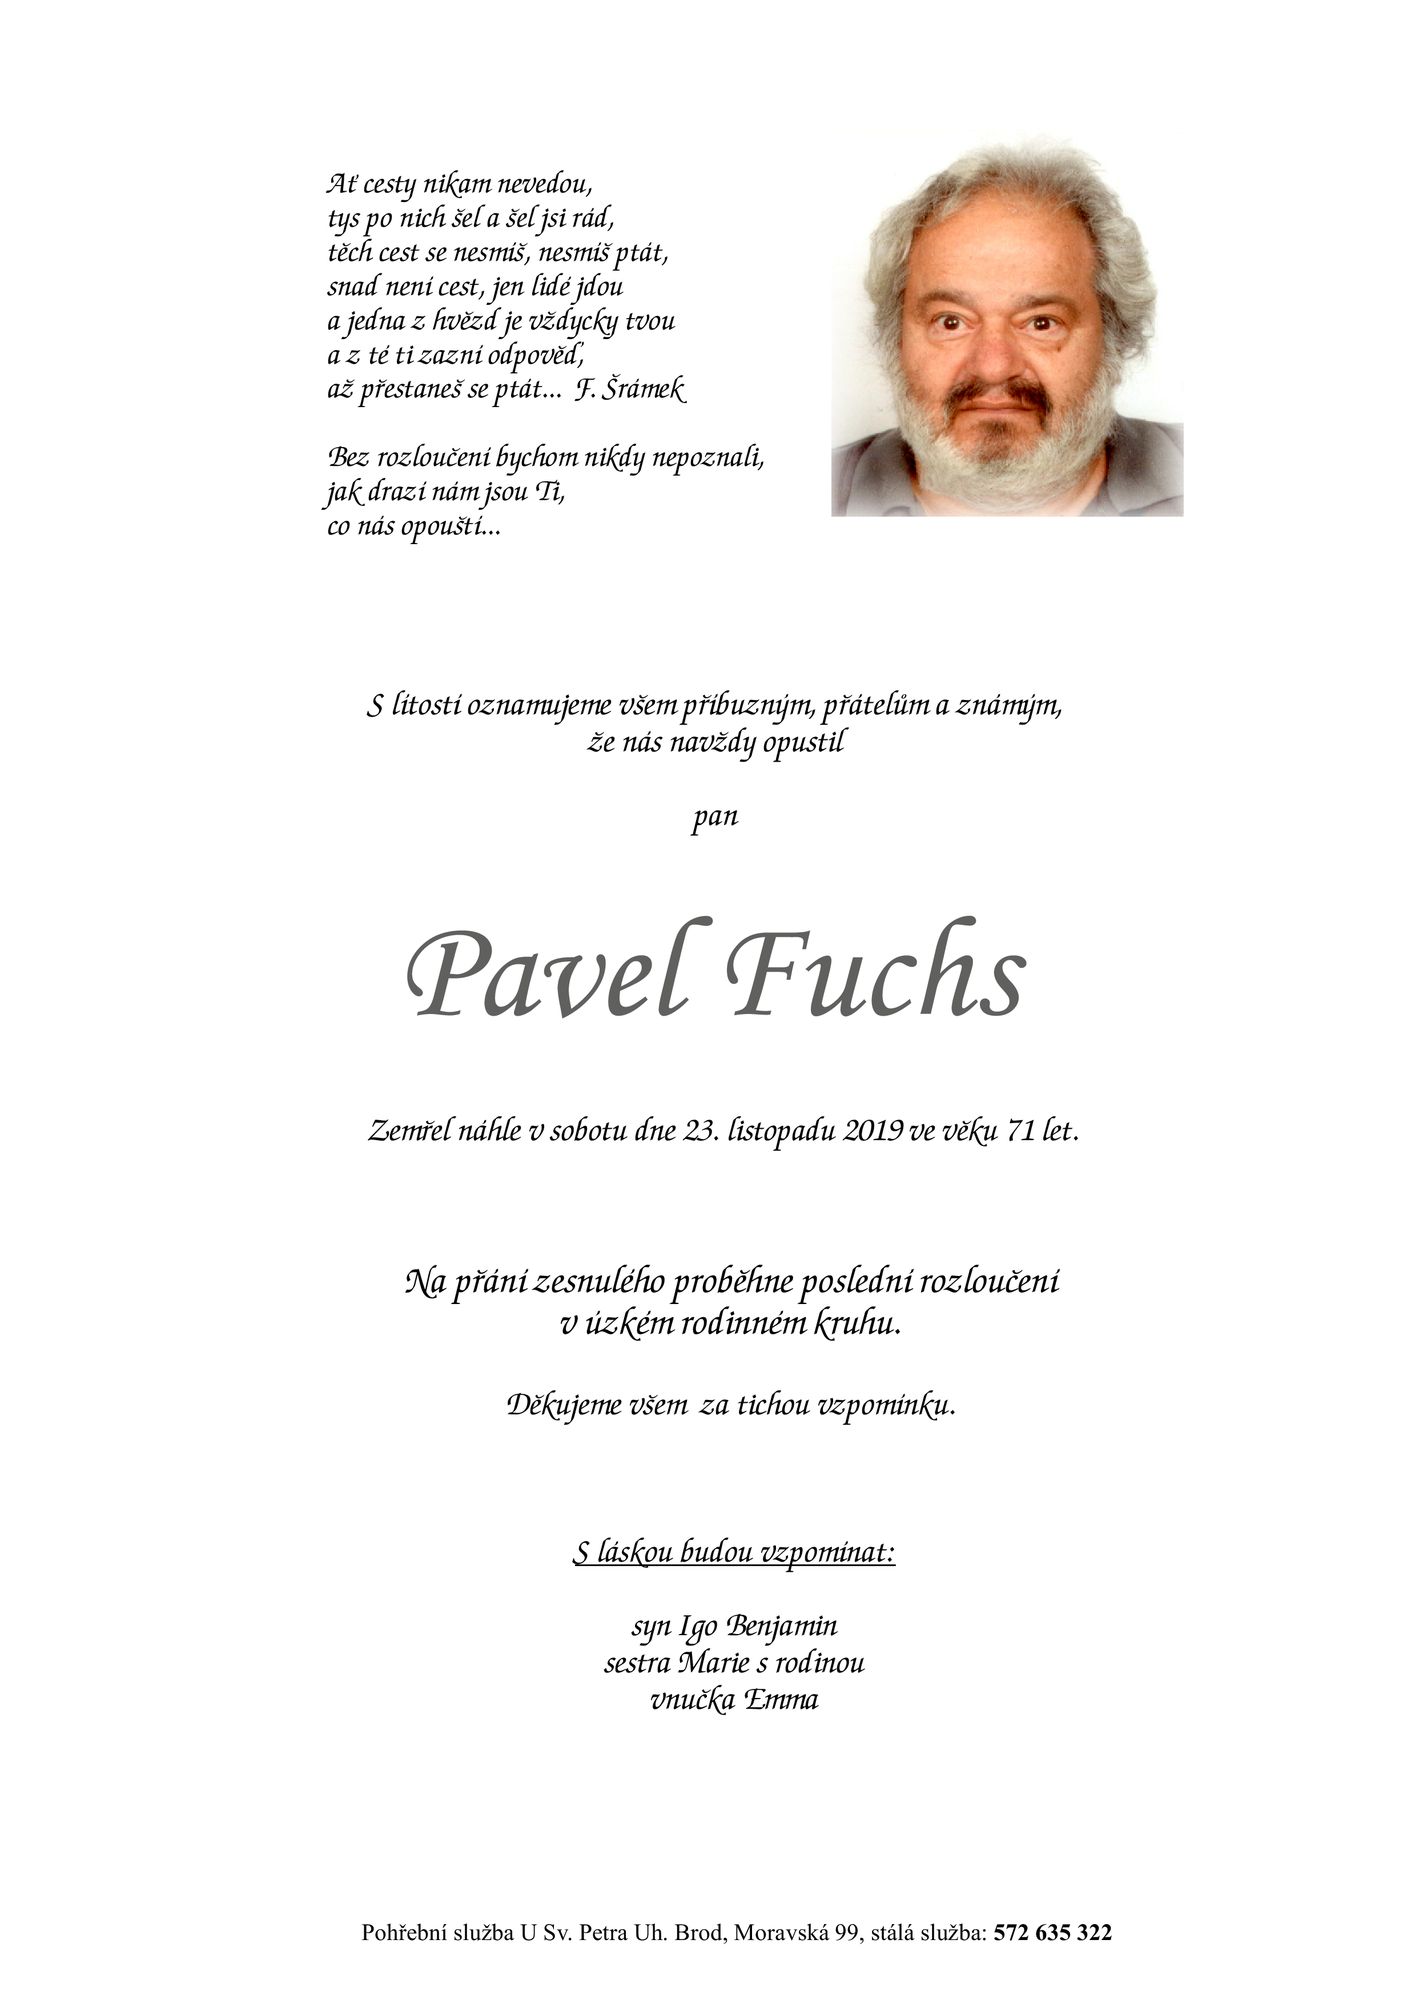 Pavel Fuchs